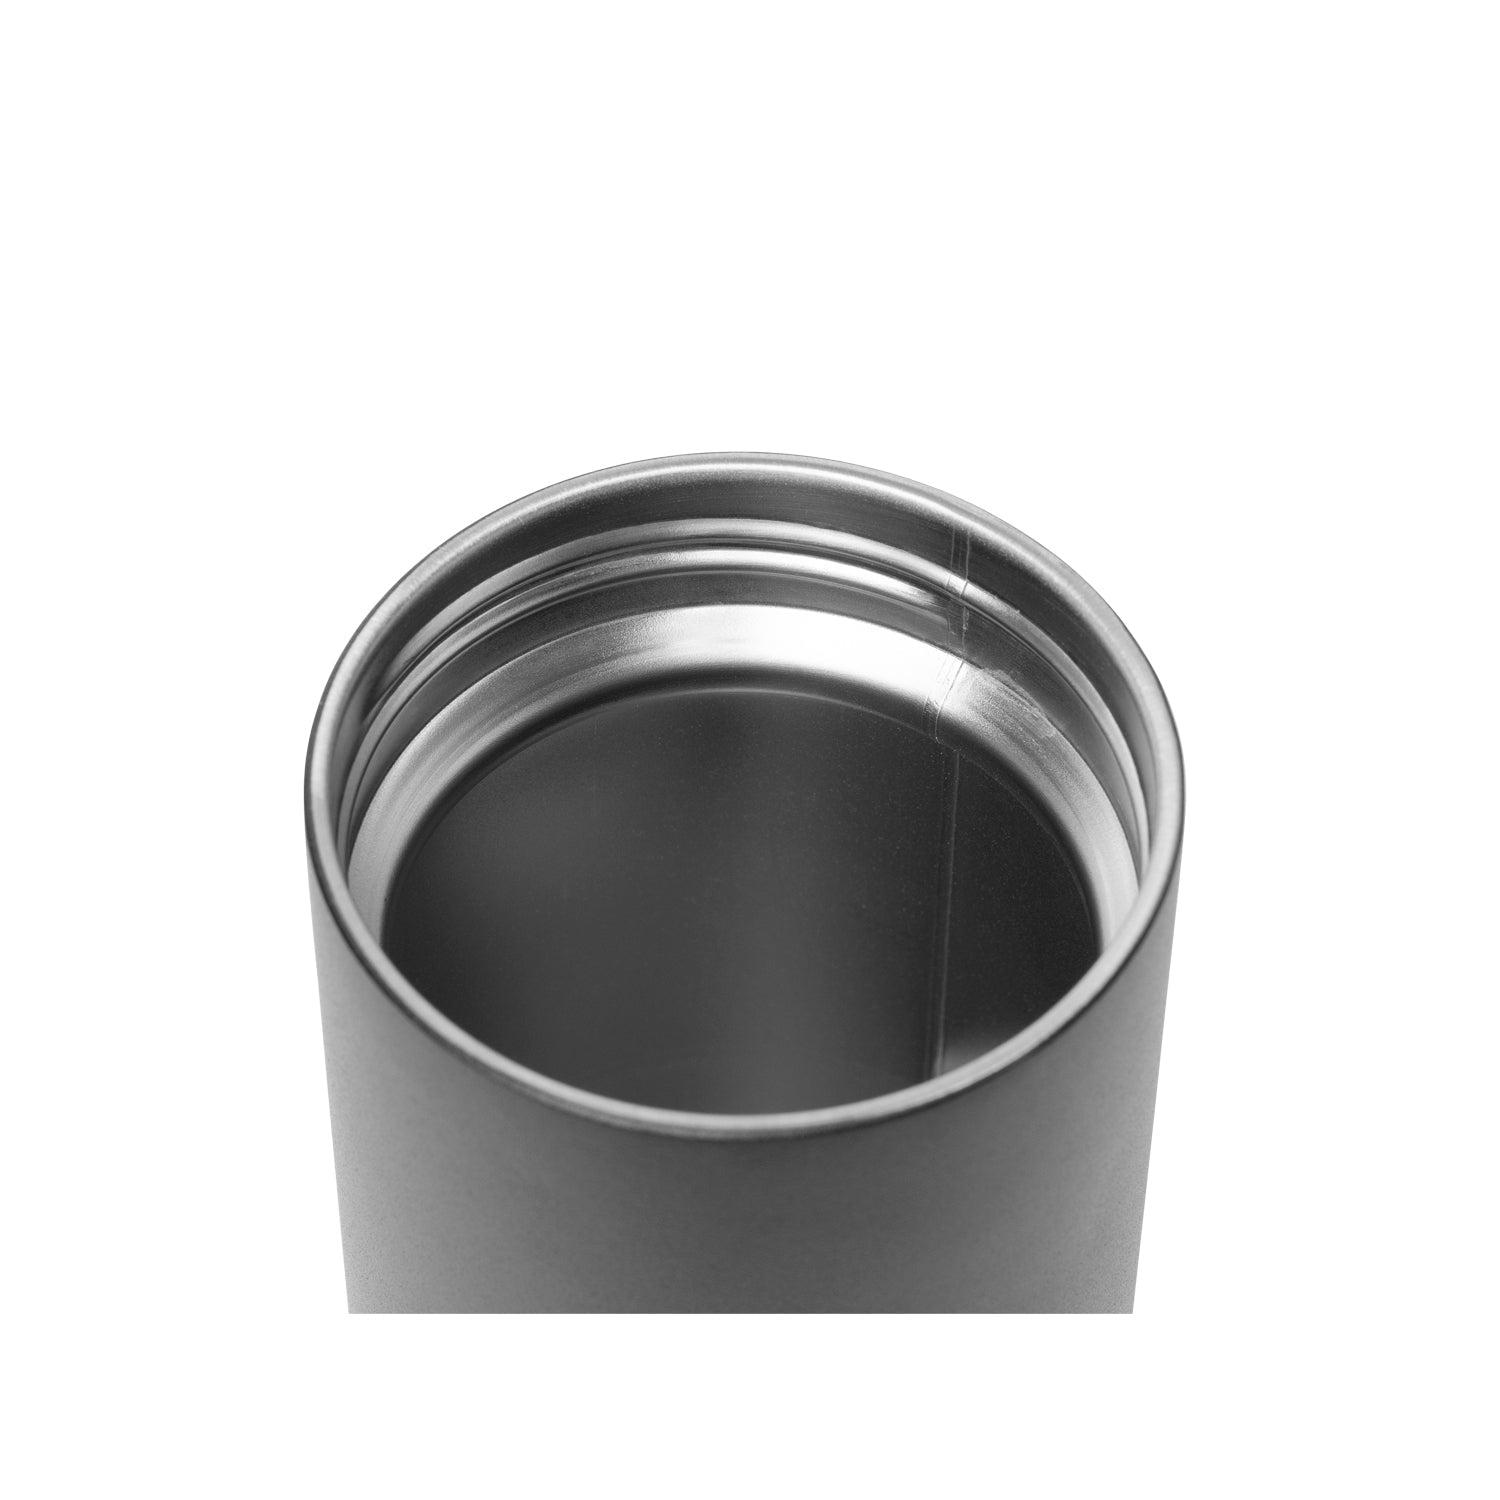 Cirkul - Cirkul fits well in your standard cup holder